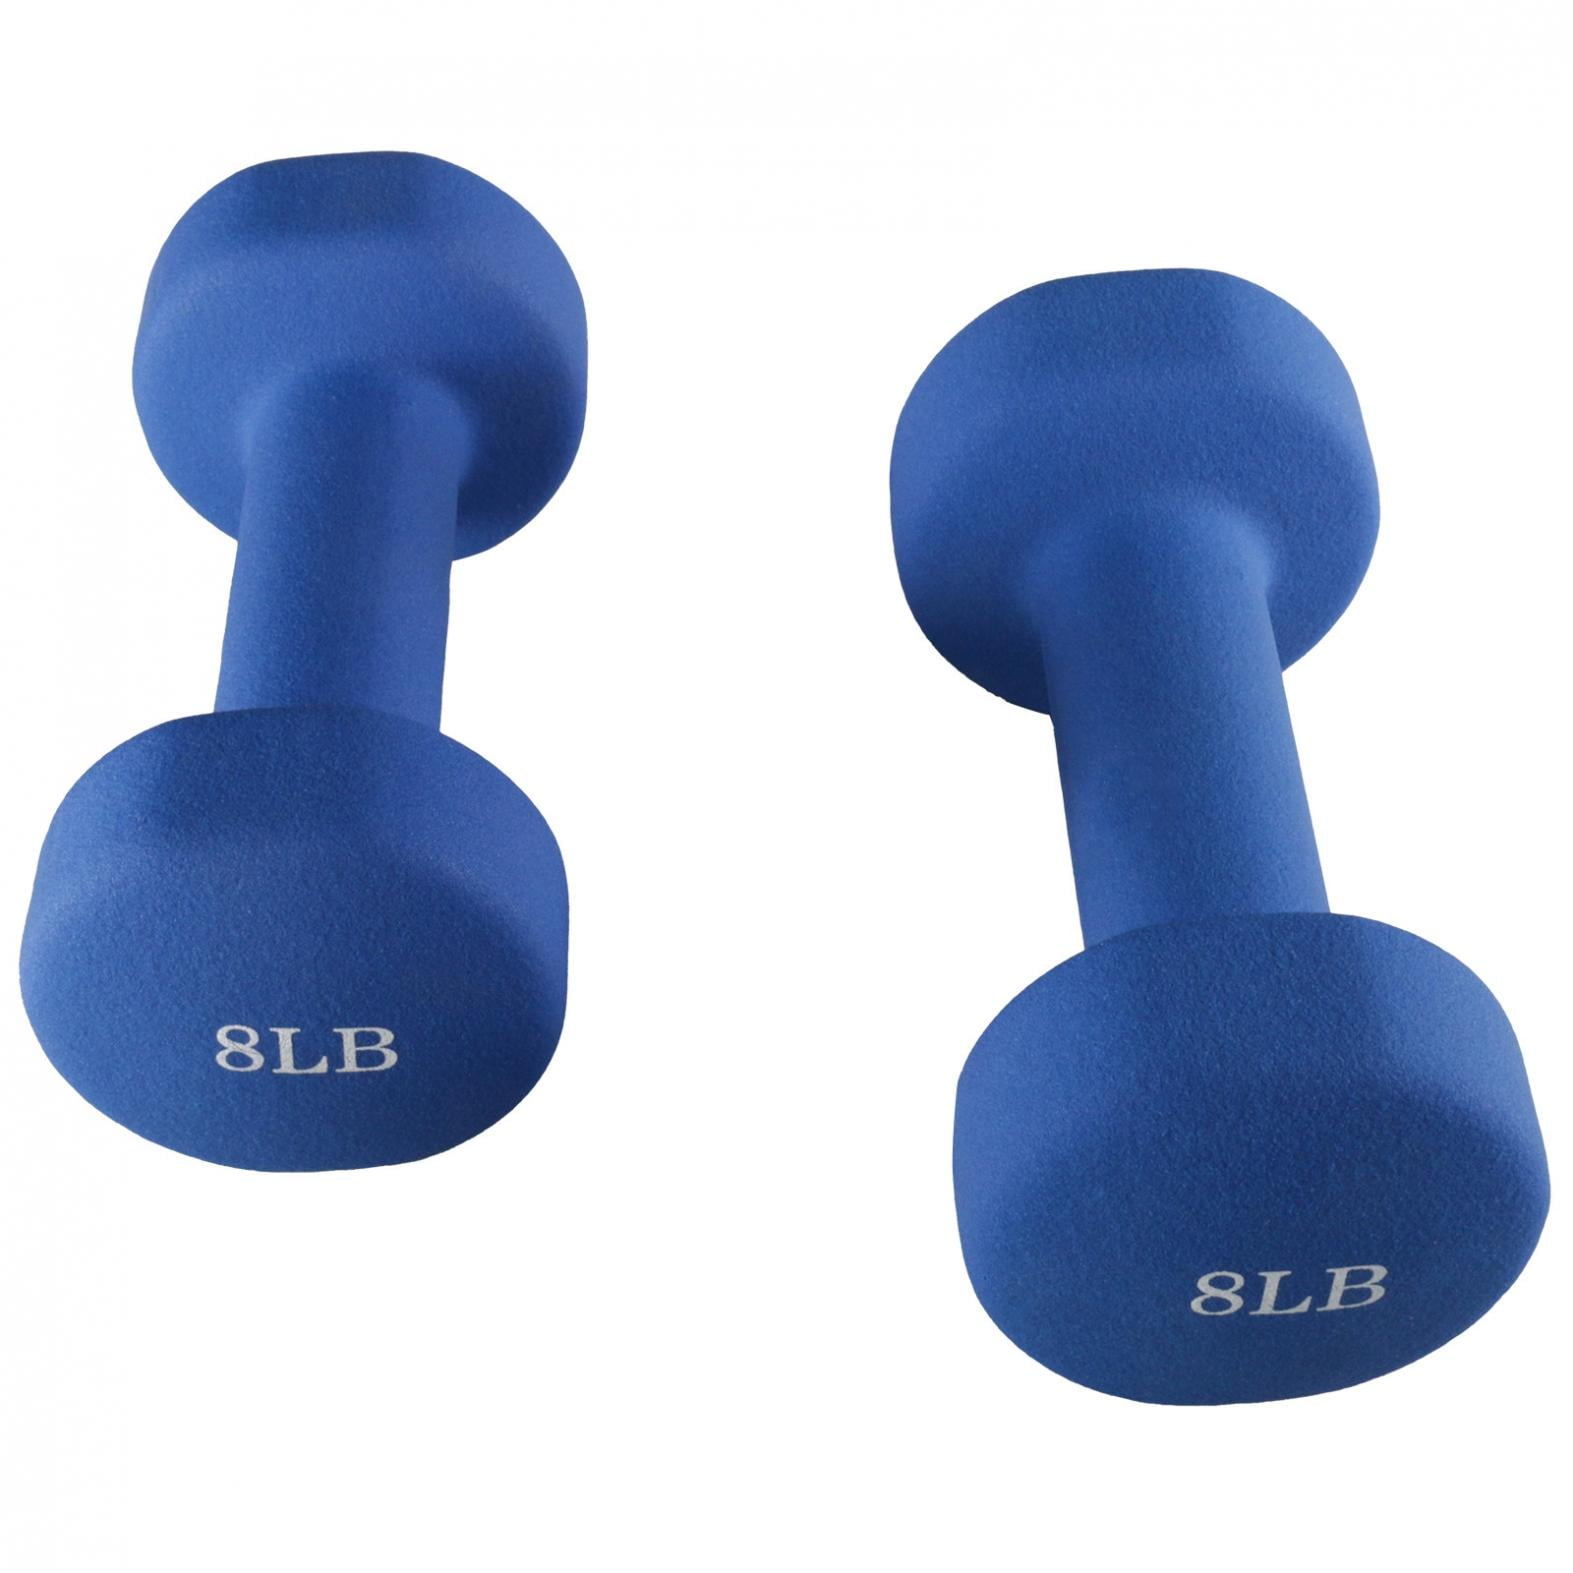 ALEKO Non-Slip Hexagonal Shaped Free Weight Dumbbells Set of 2 10 lbs Blue 